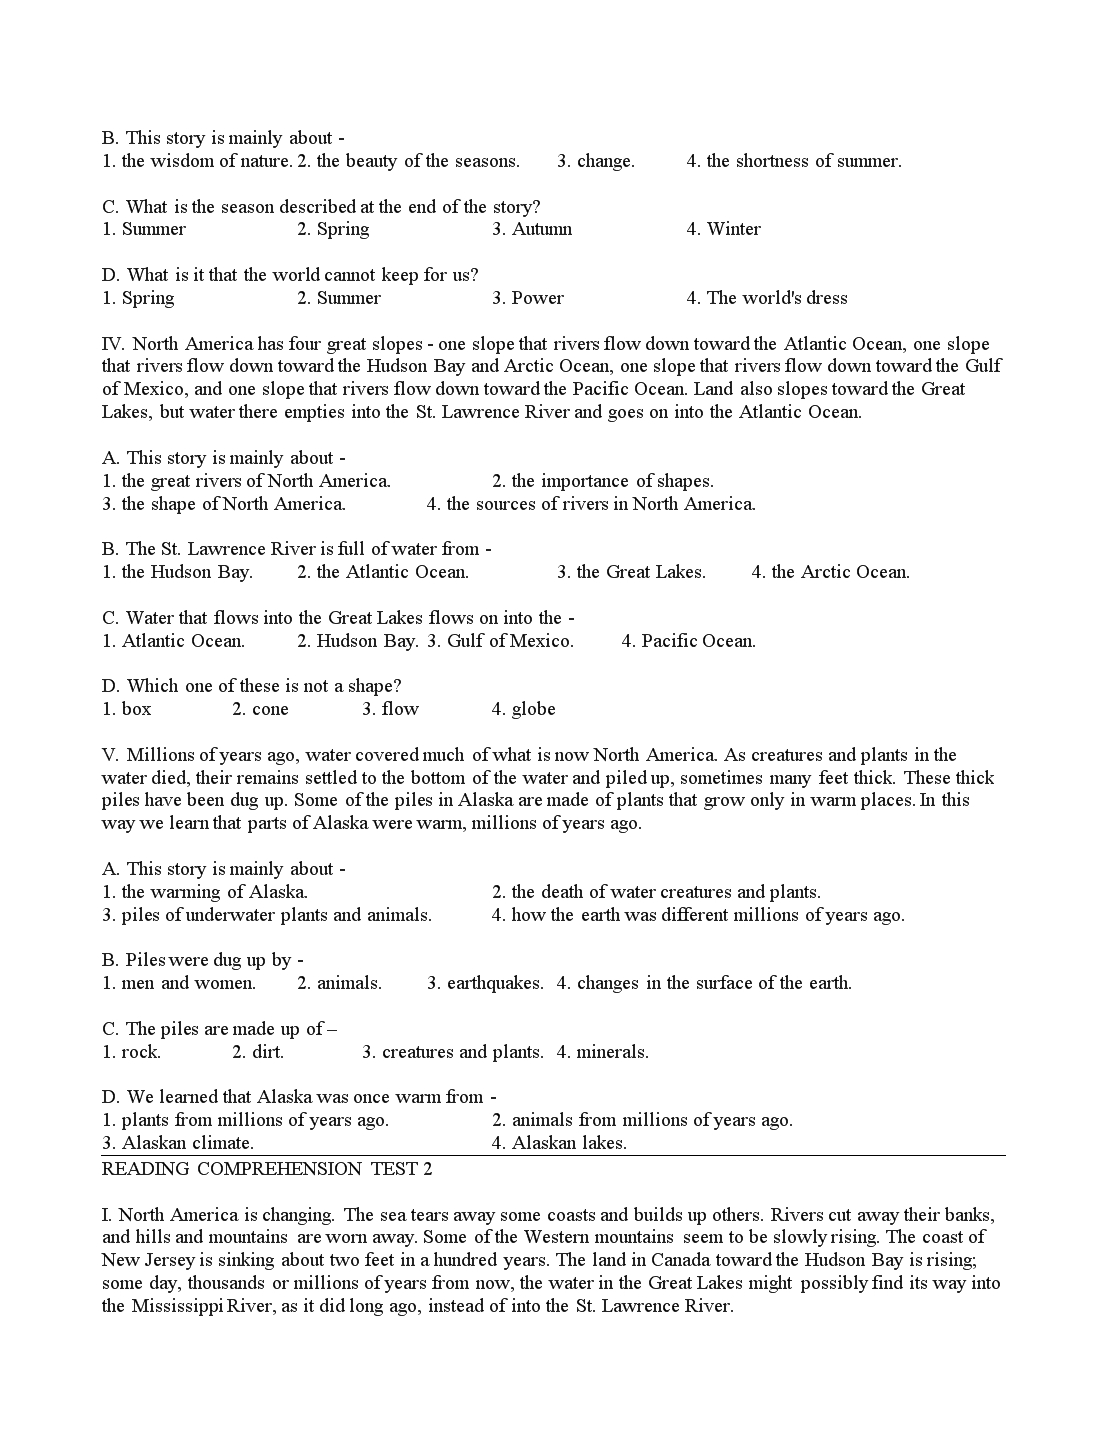 Reading comprehension test 1 trang 2